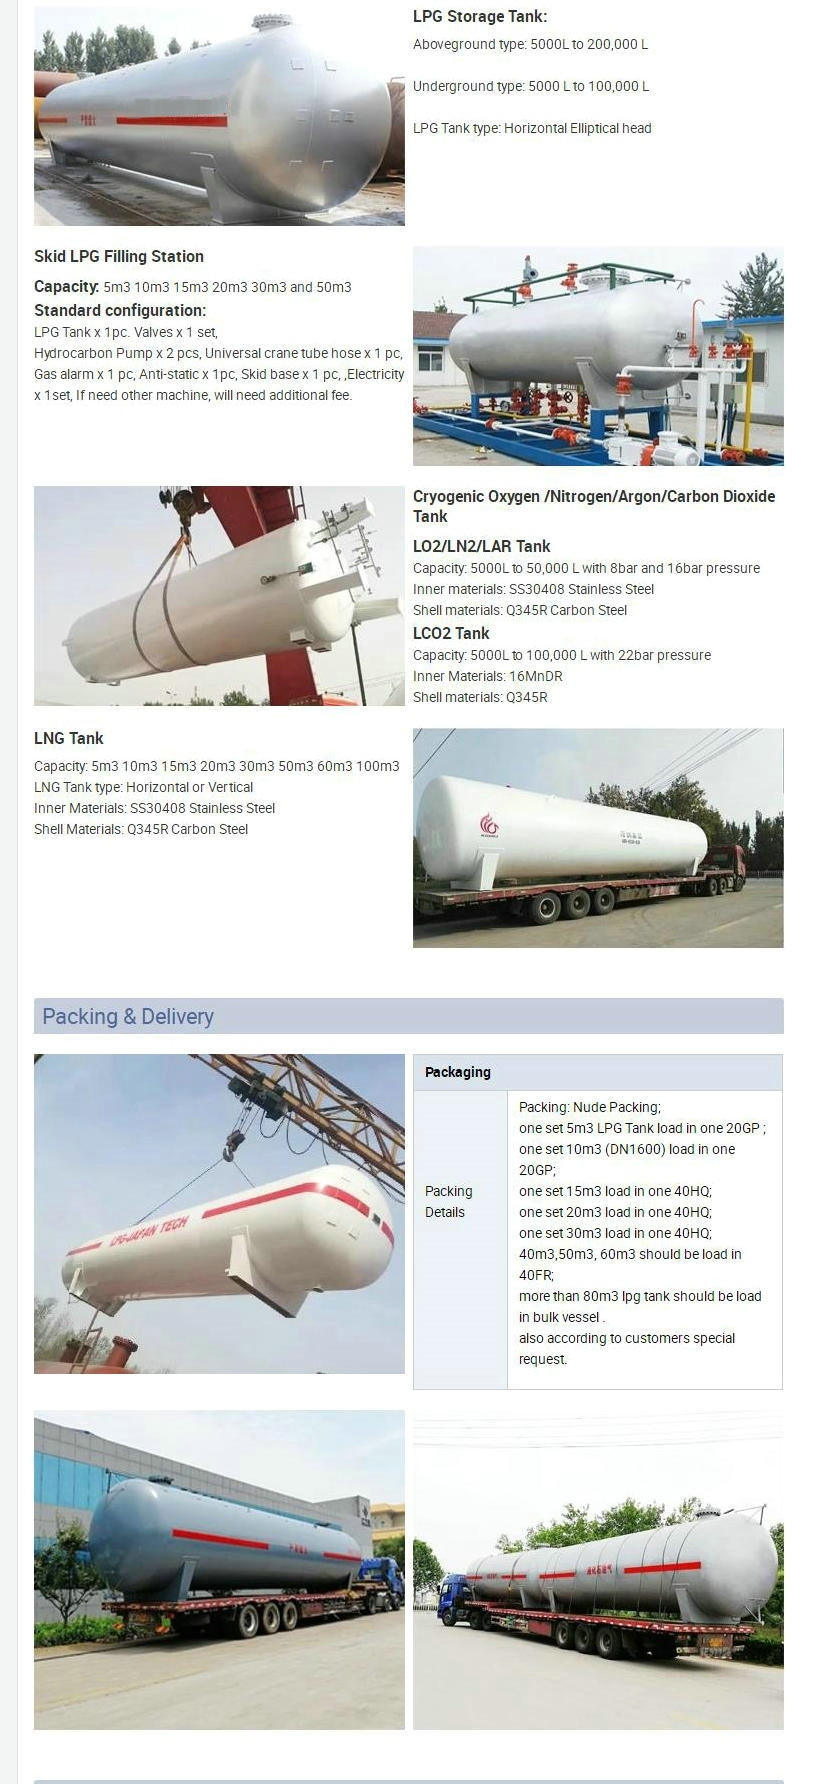 Horizontal Storage Isobutane Tank 32m3 (Pressure Vessel) for LPG Gas Propane, Liquid Sulfur Dioxide, Isobutane, Dimethyl Ether